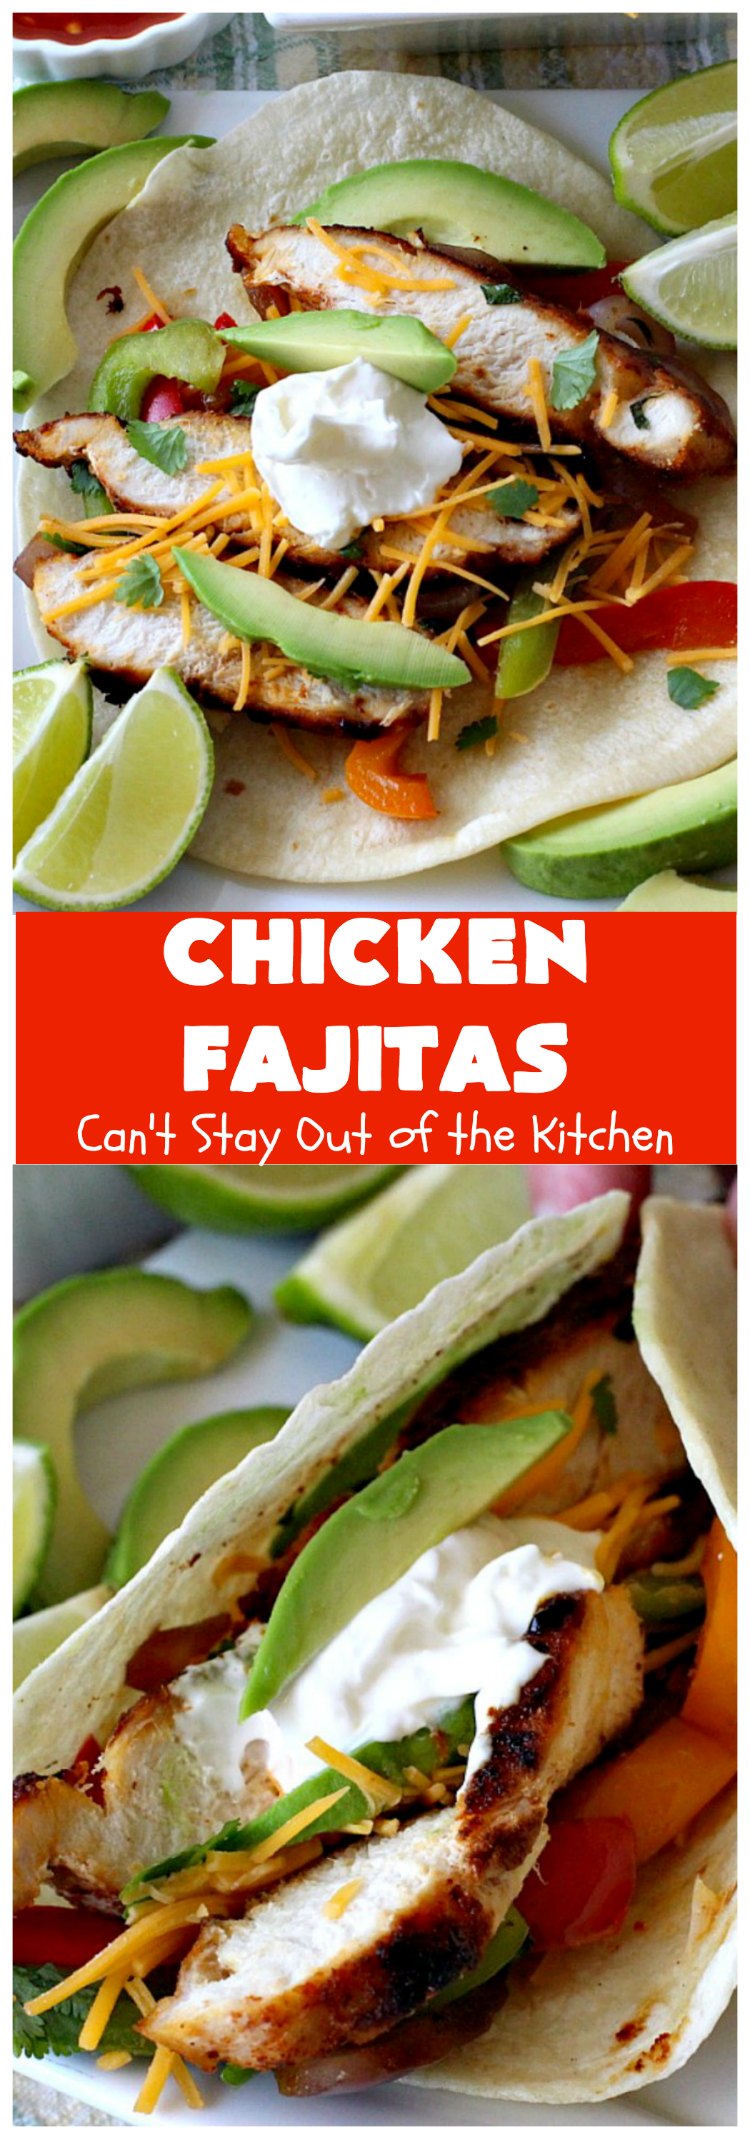 Chicken Fajitas | Can't Stay Out of the Kitchen | Out of this world #chicken #fajitas #recipe. Serve with #guacamole #avocados #salsa #rice #beans & other #TexMex fixin's! #ChickenFajitas #tortillas #Fajitas